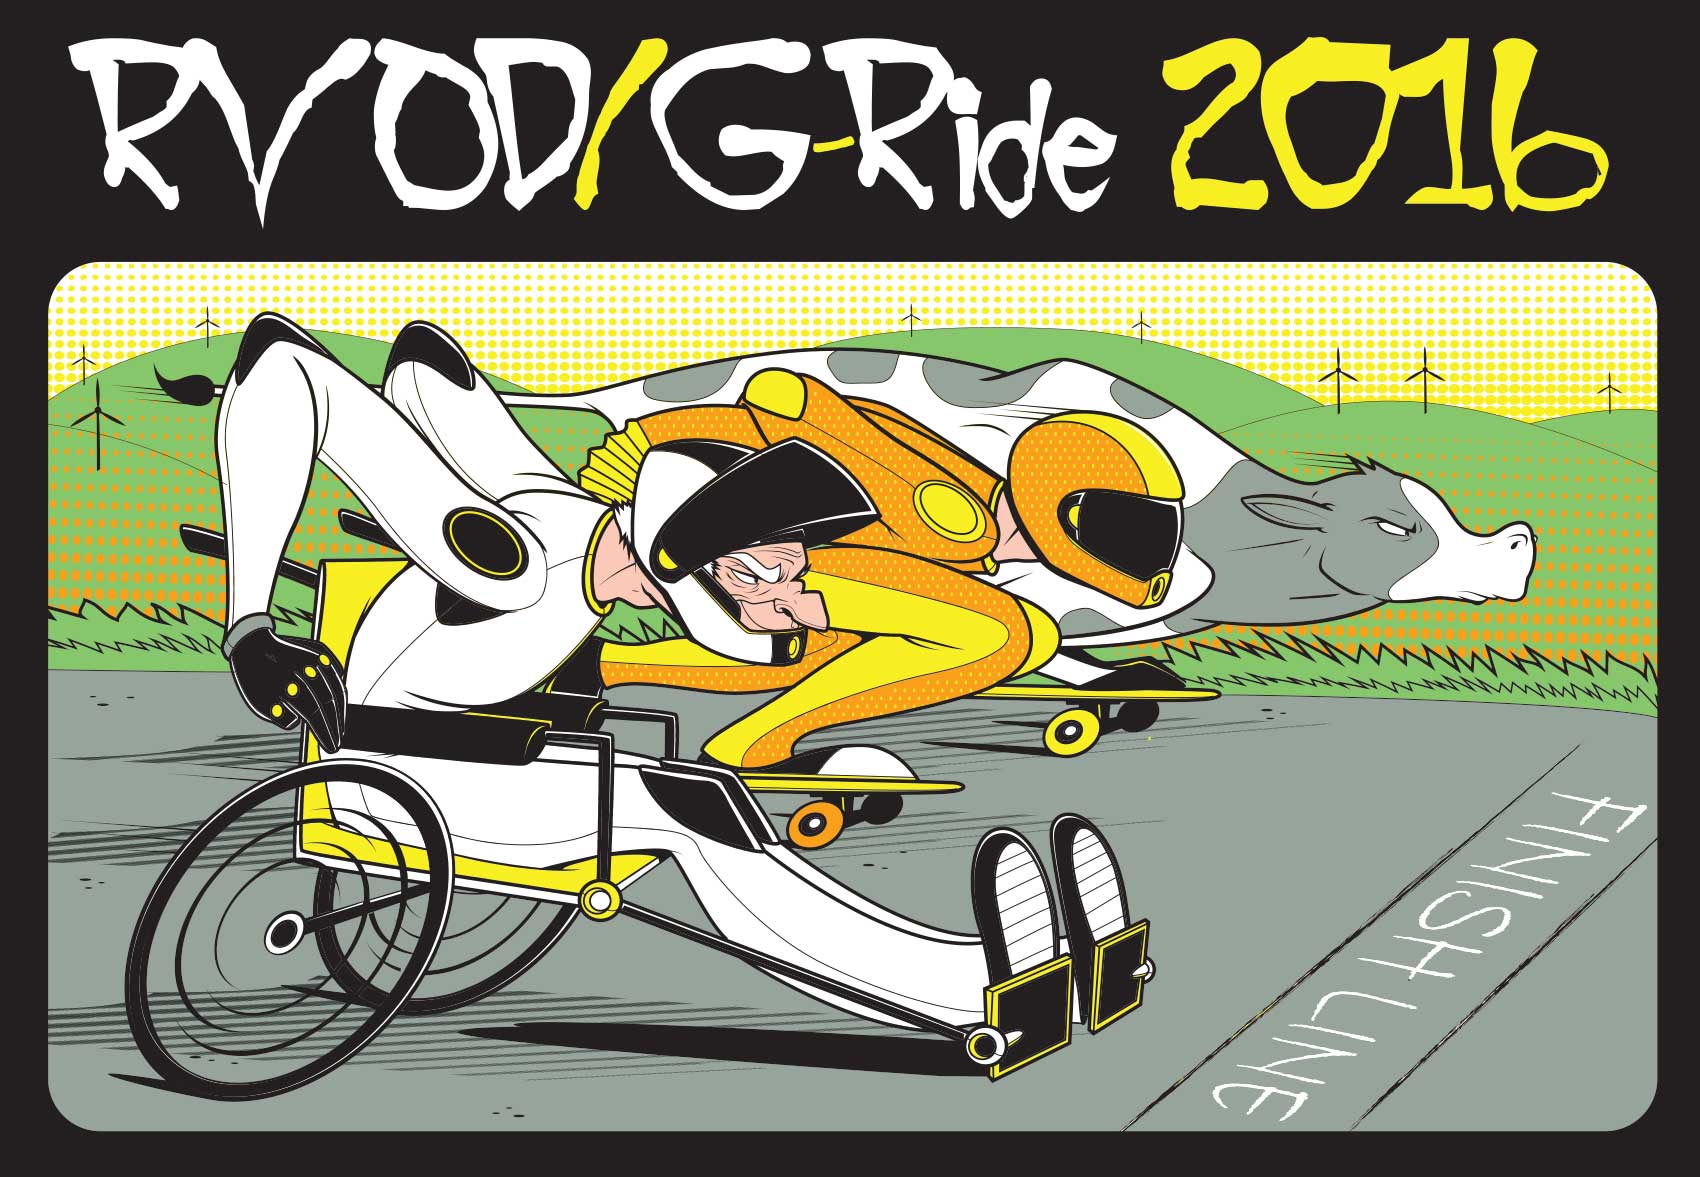 2016 RVOD G-RIDE